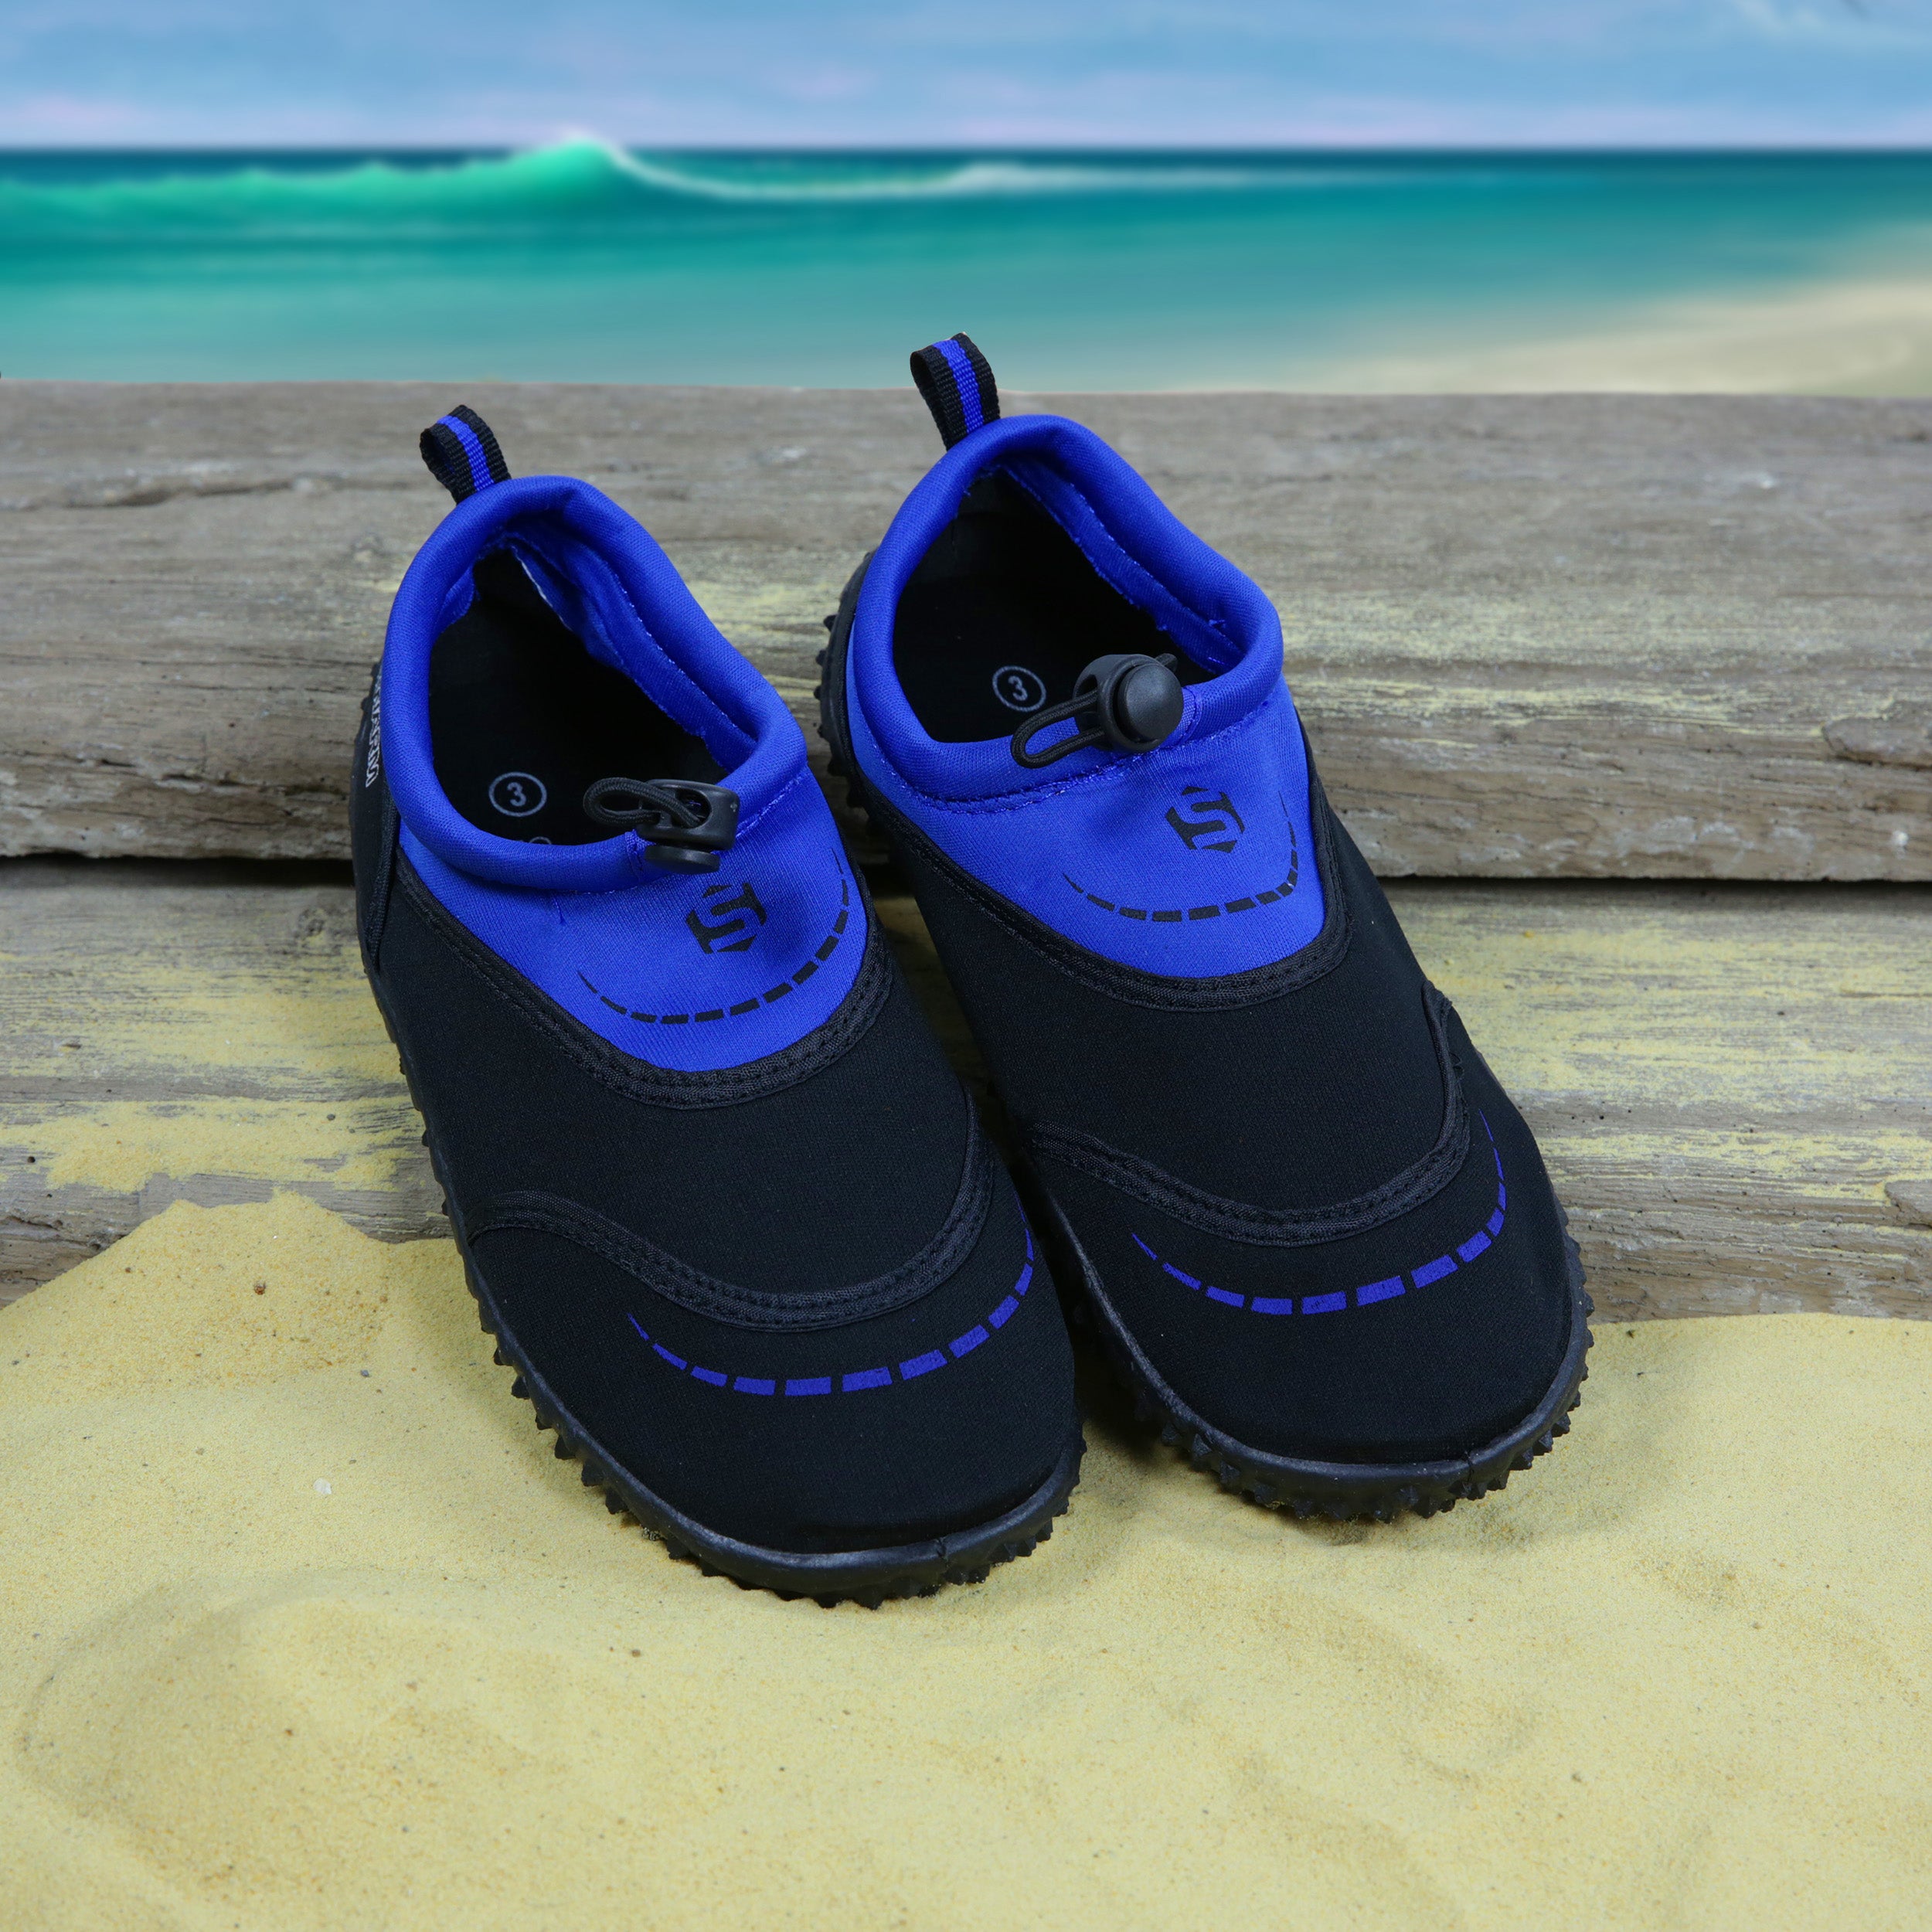 Typhoon Swarm Aqua Beach Shoes Black/Blue - Childs - UK 1 / EUR 33